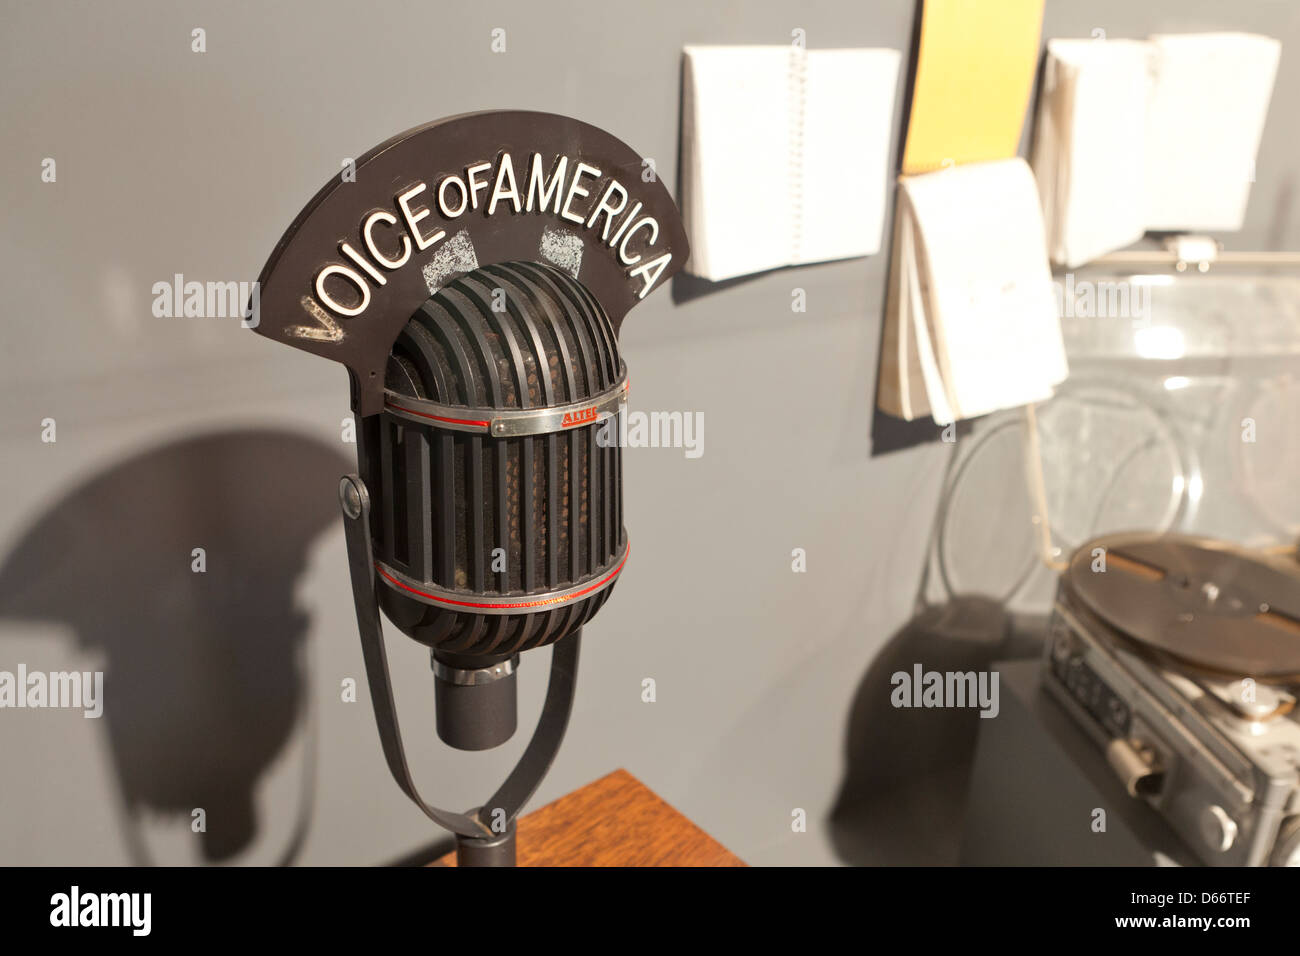 Antique Voice of America broadcast mic Stock Photo